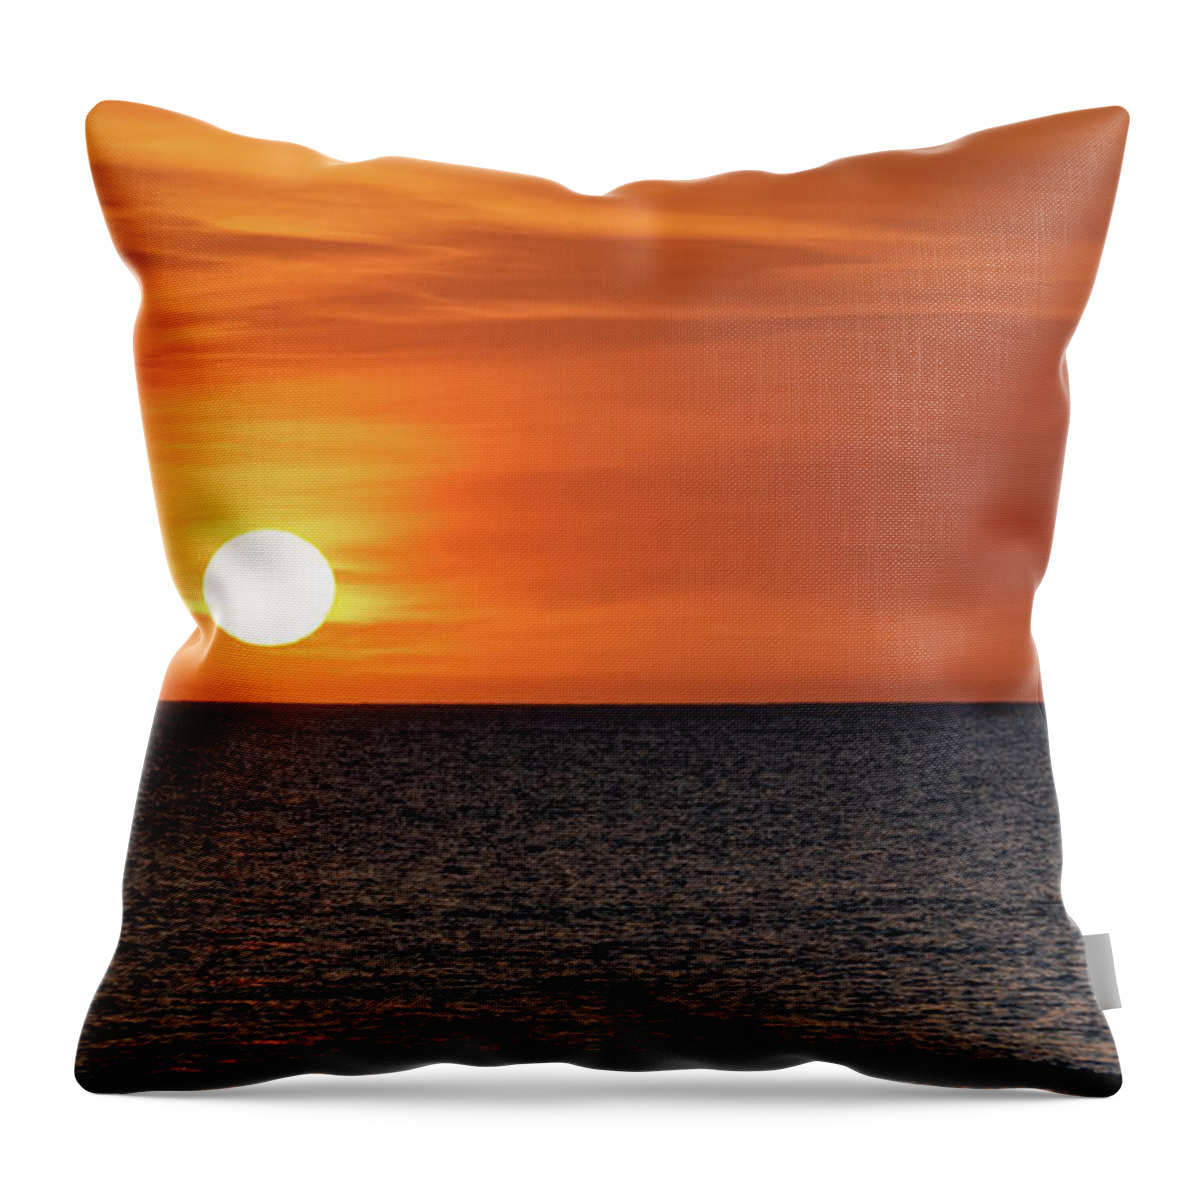 Sunset Throw Pillow featuring the photograph It's A Good Life by Pamela McDaniel